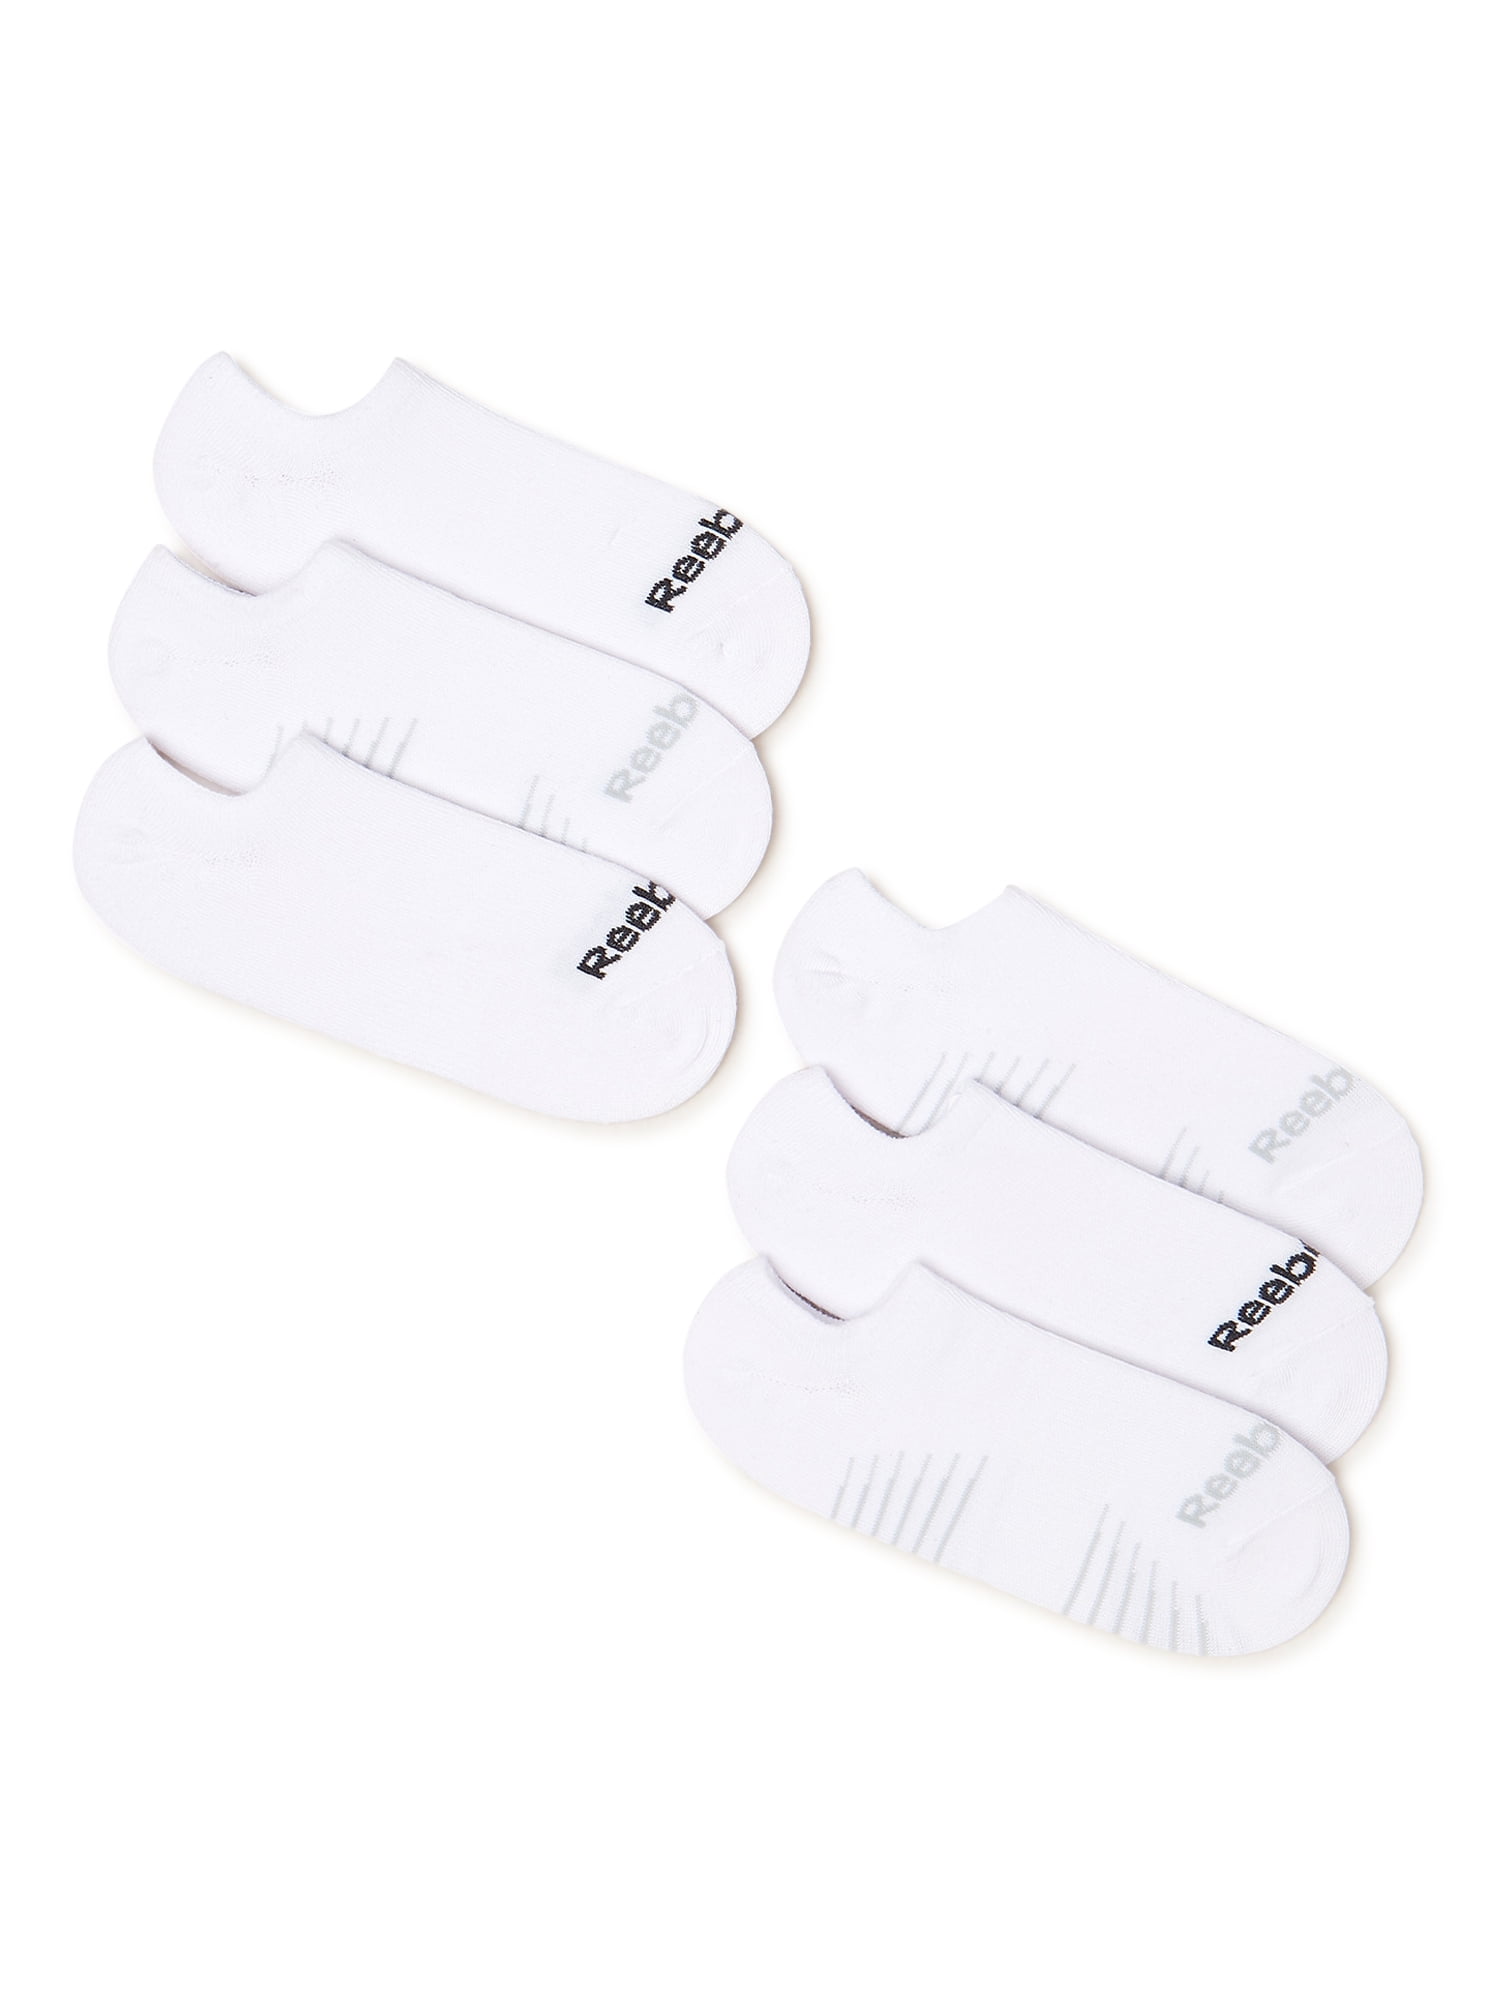 Reebok Men's Pro Series Flatknit No Show Liner Socks, 6-Pack